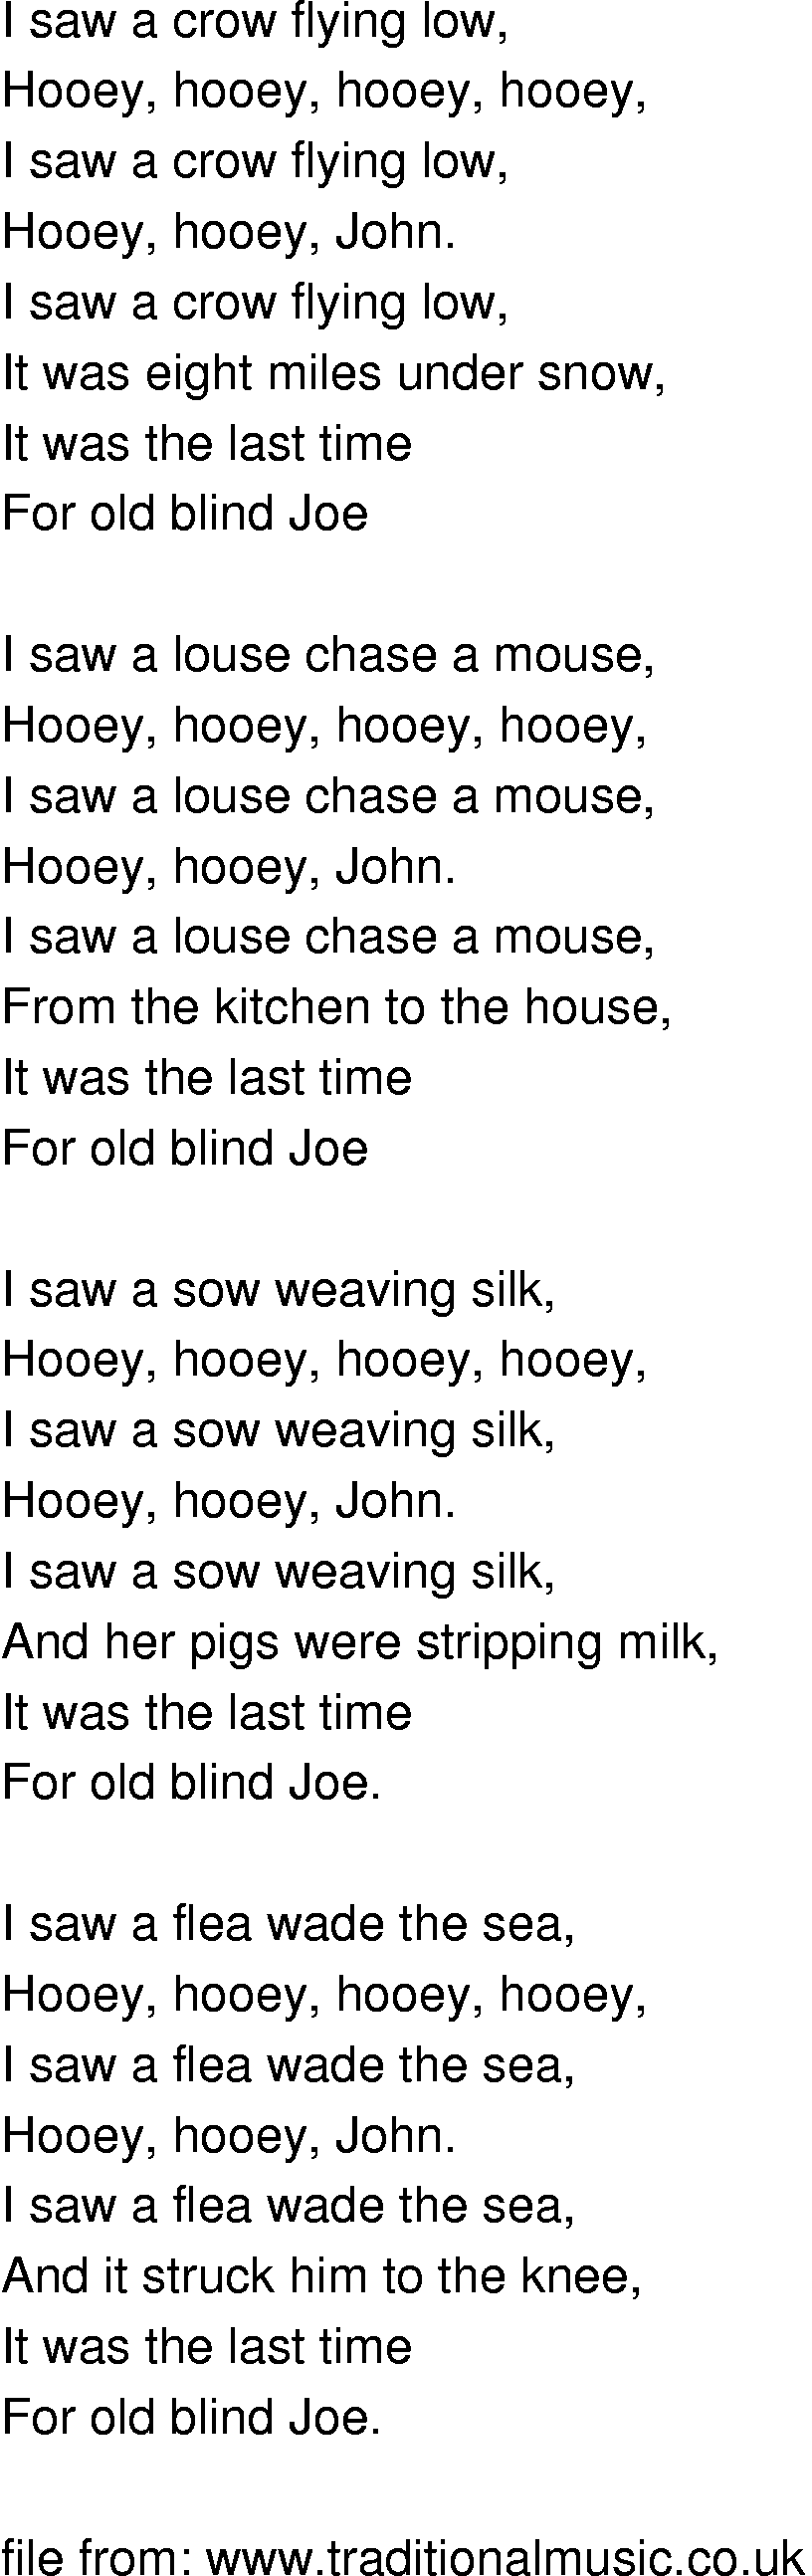 Old-Time (oldtimey) Song Lyrics - johnny fool